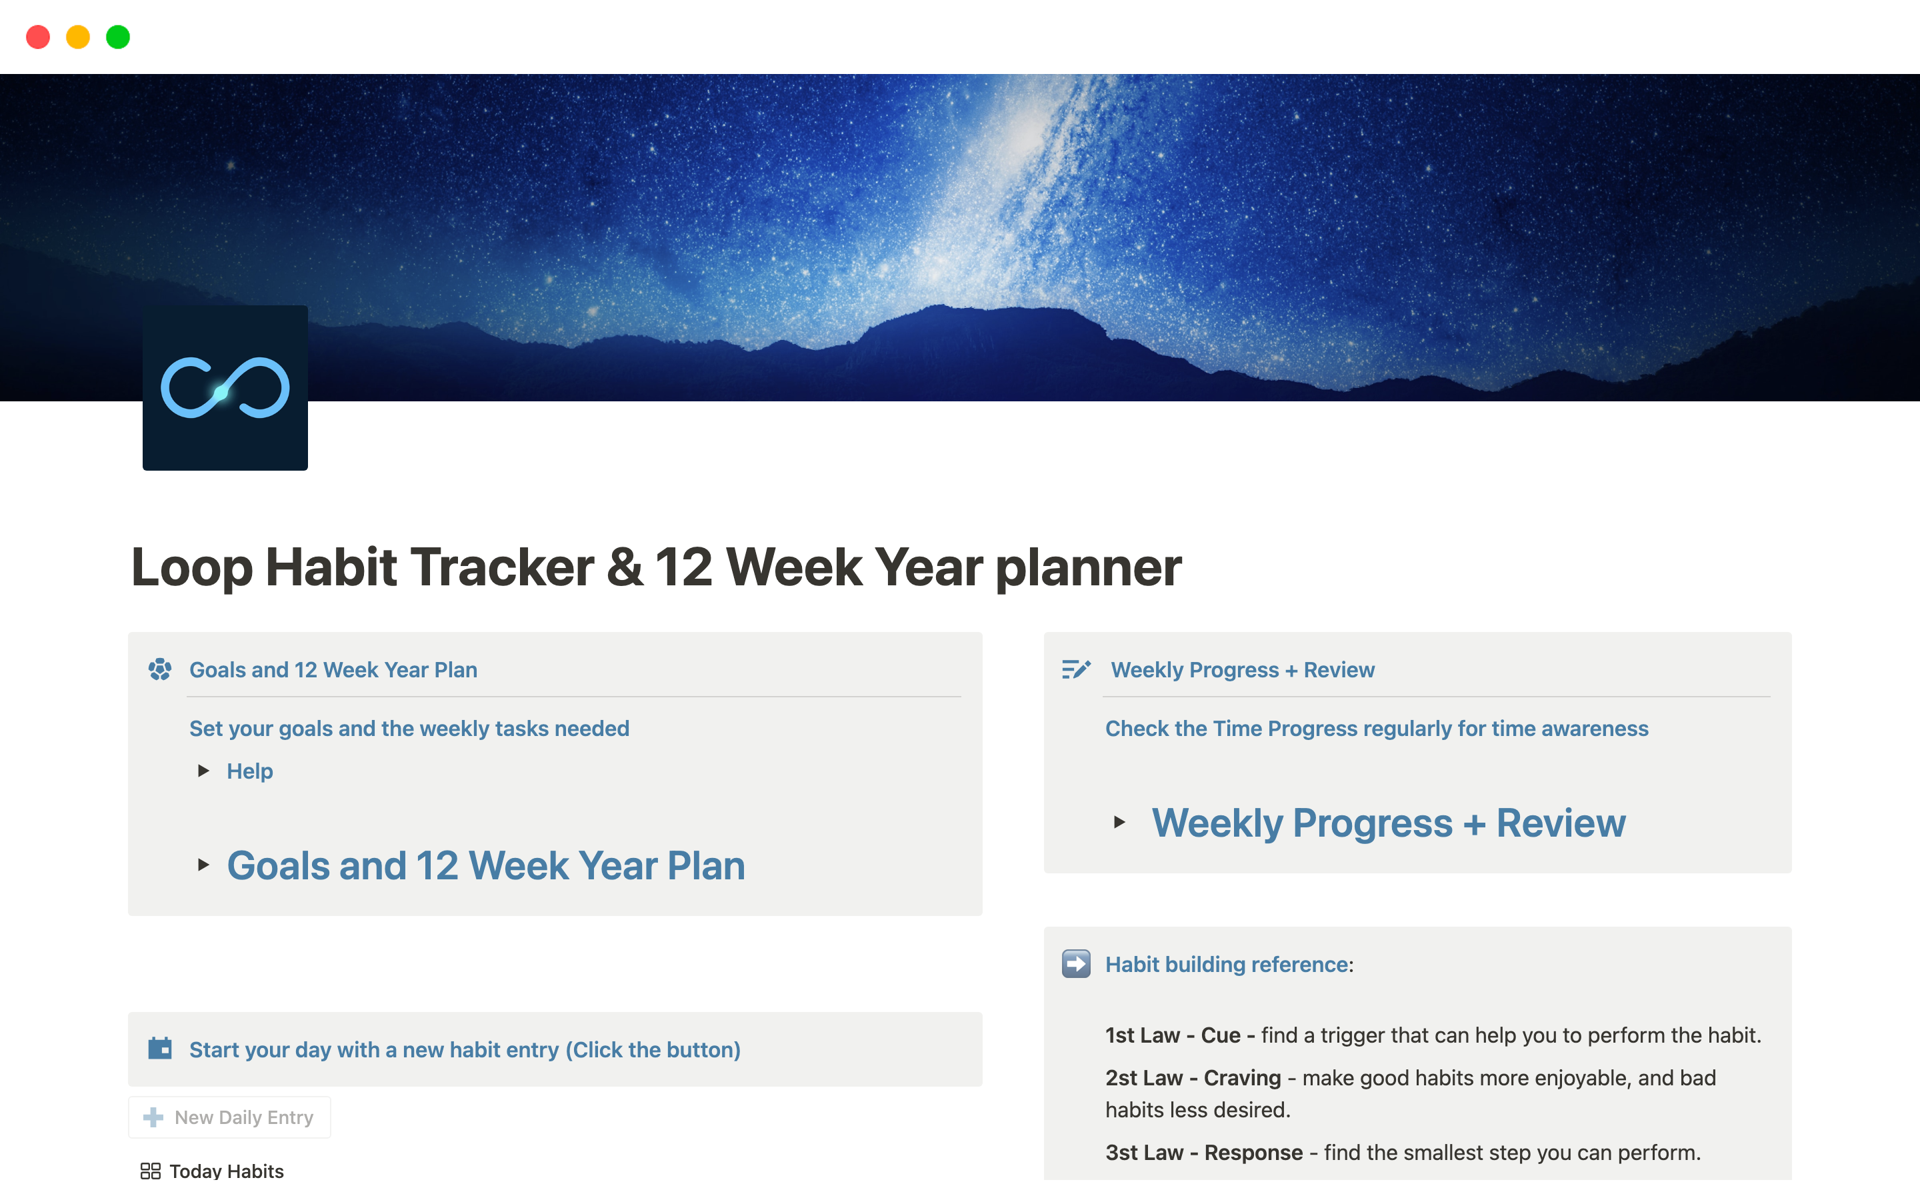 Uma prévia do modelo para Loop Habit Tracker & 12 Week Year planner